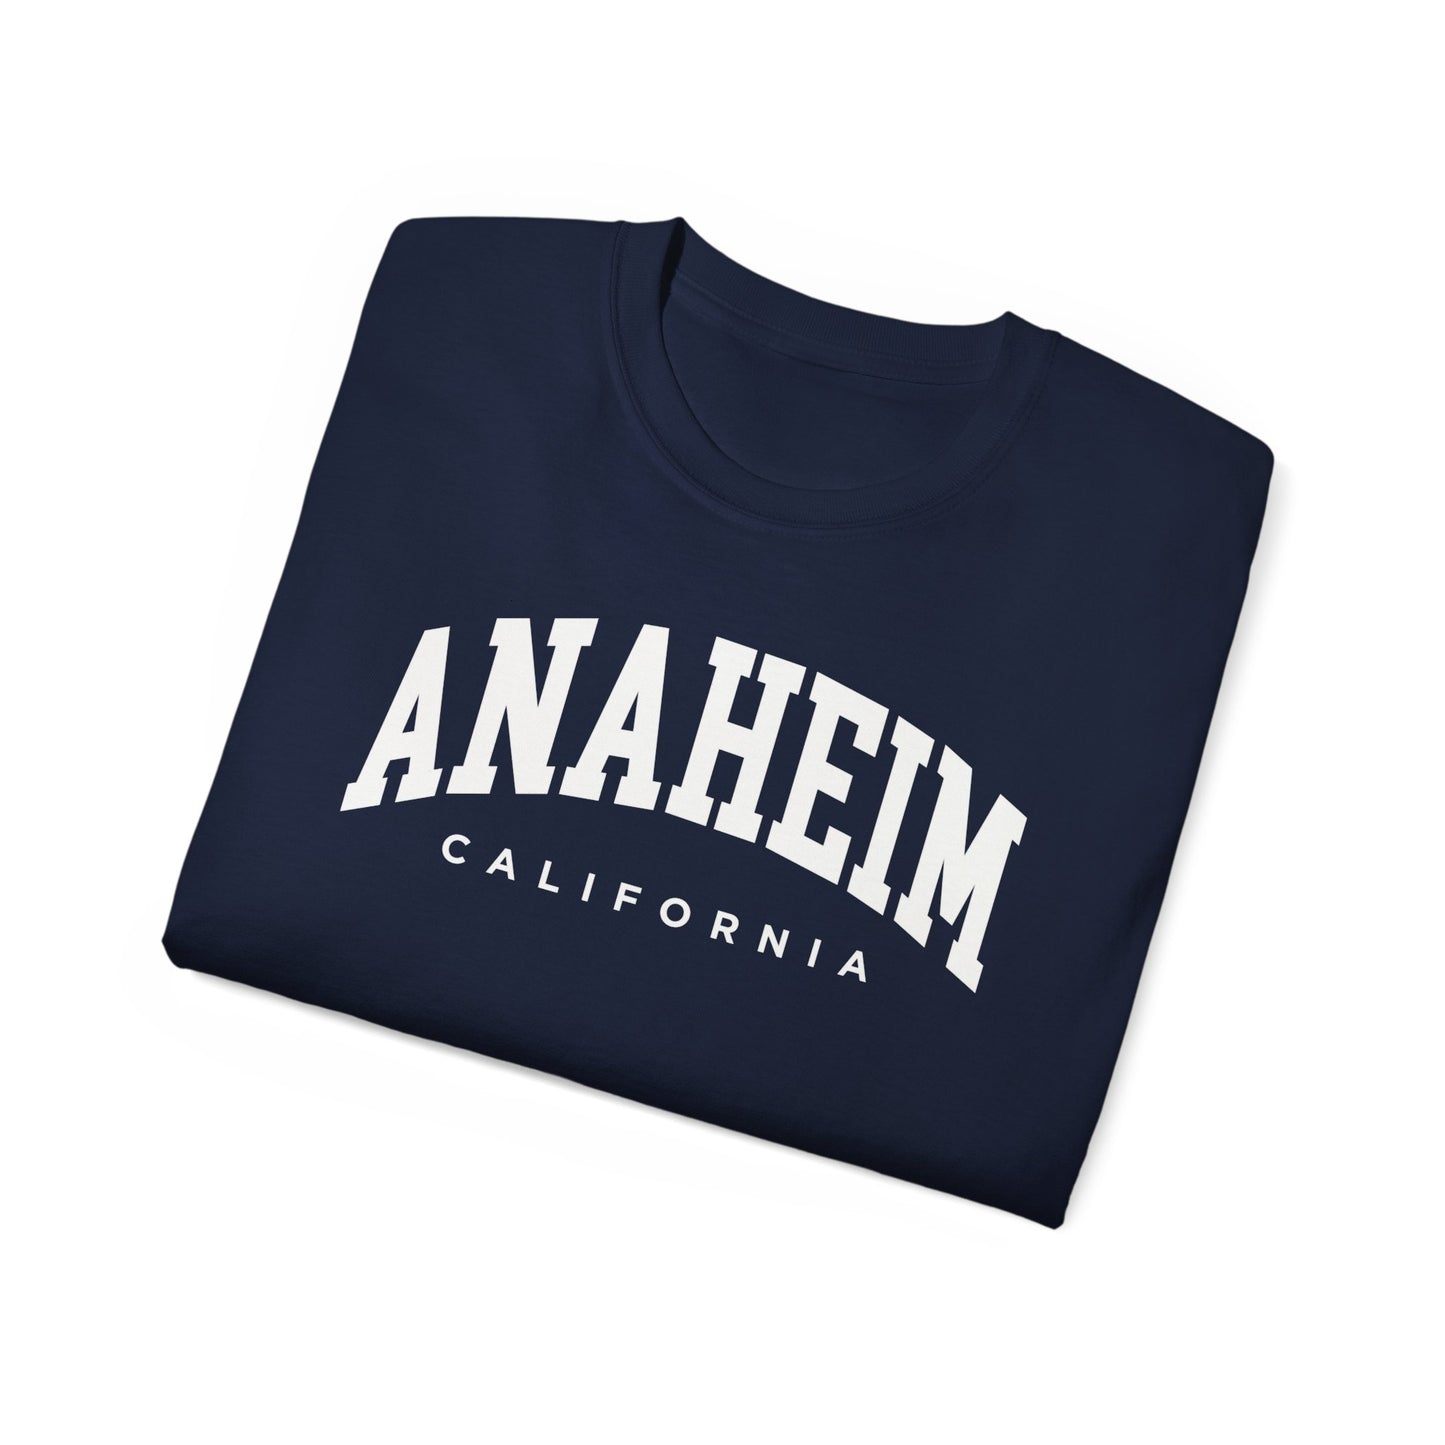 Anaheim California Tee